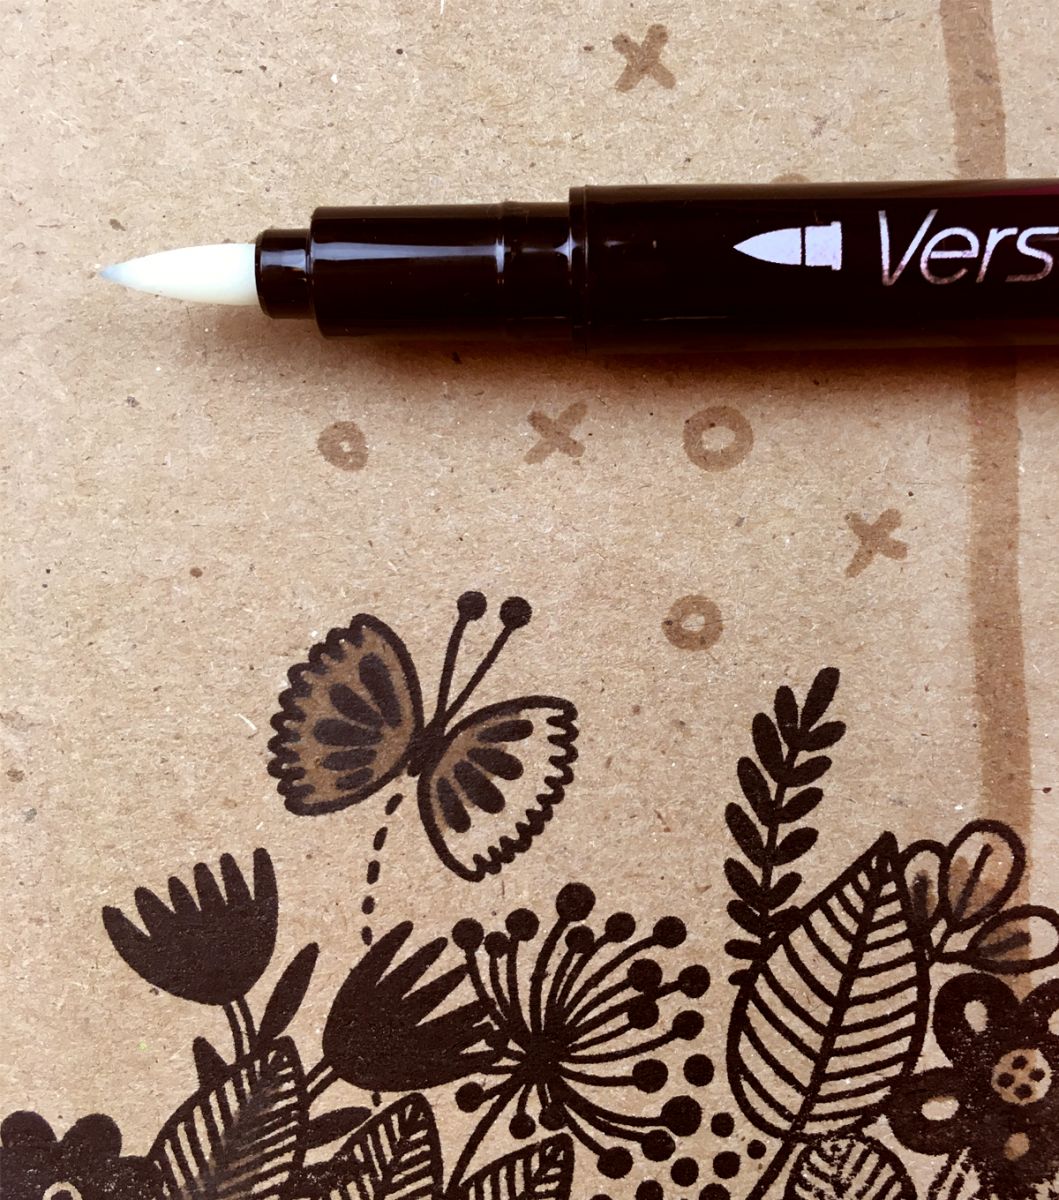 VersaMark Watermark Stamp Pad – Honey Bee Stamps